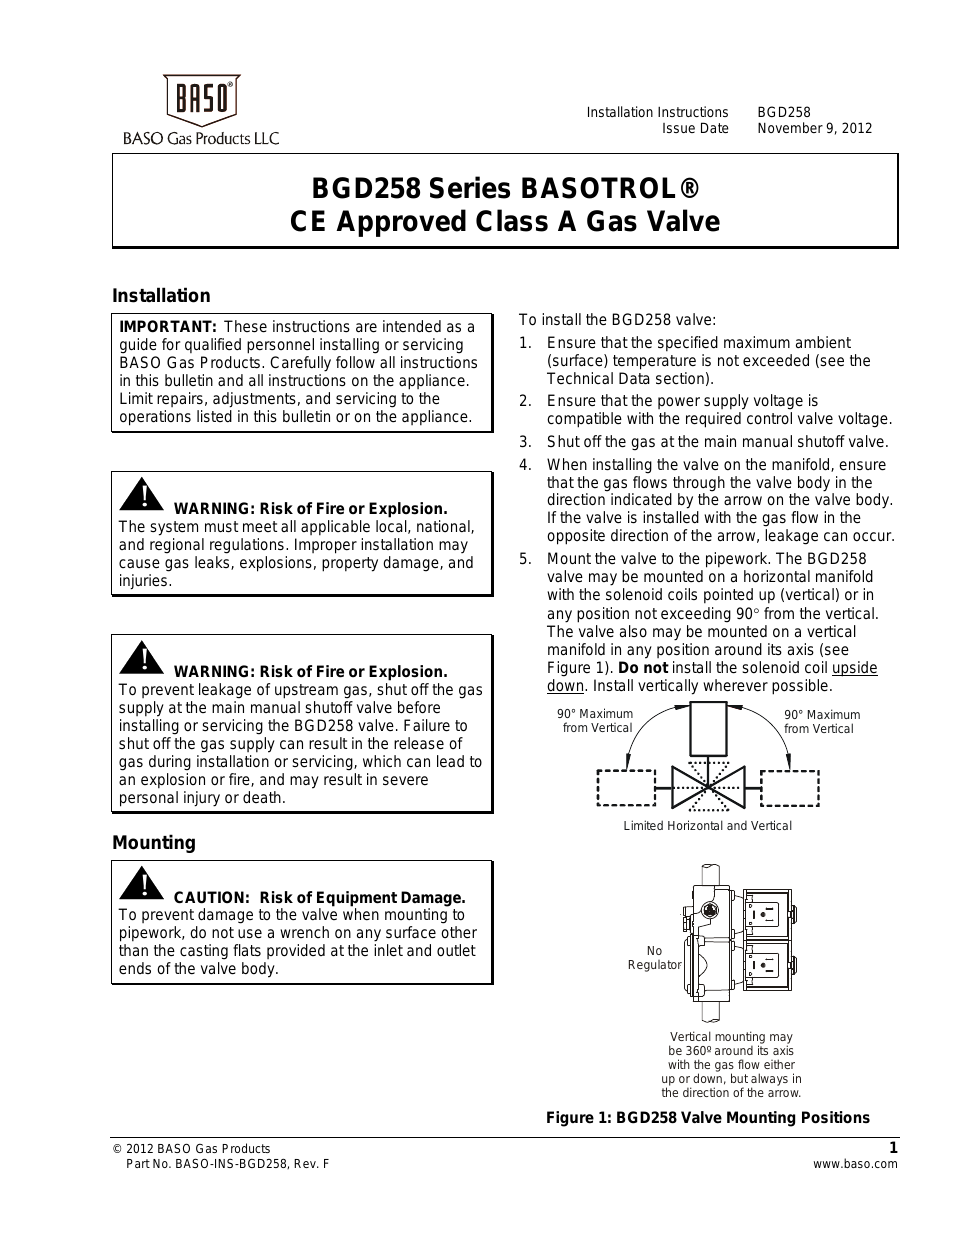 BGD258 Series BASOTROL CE Approved Class A Gas Valve